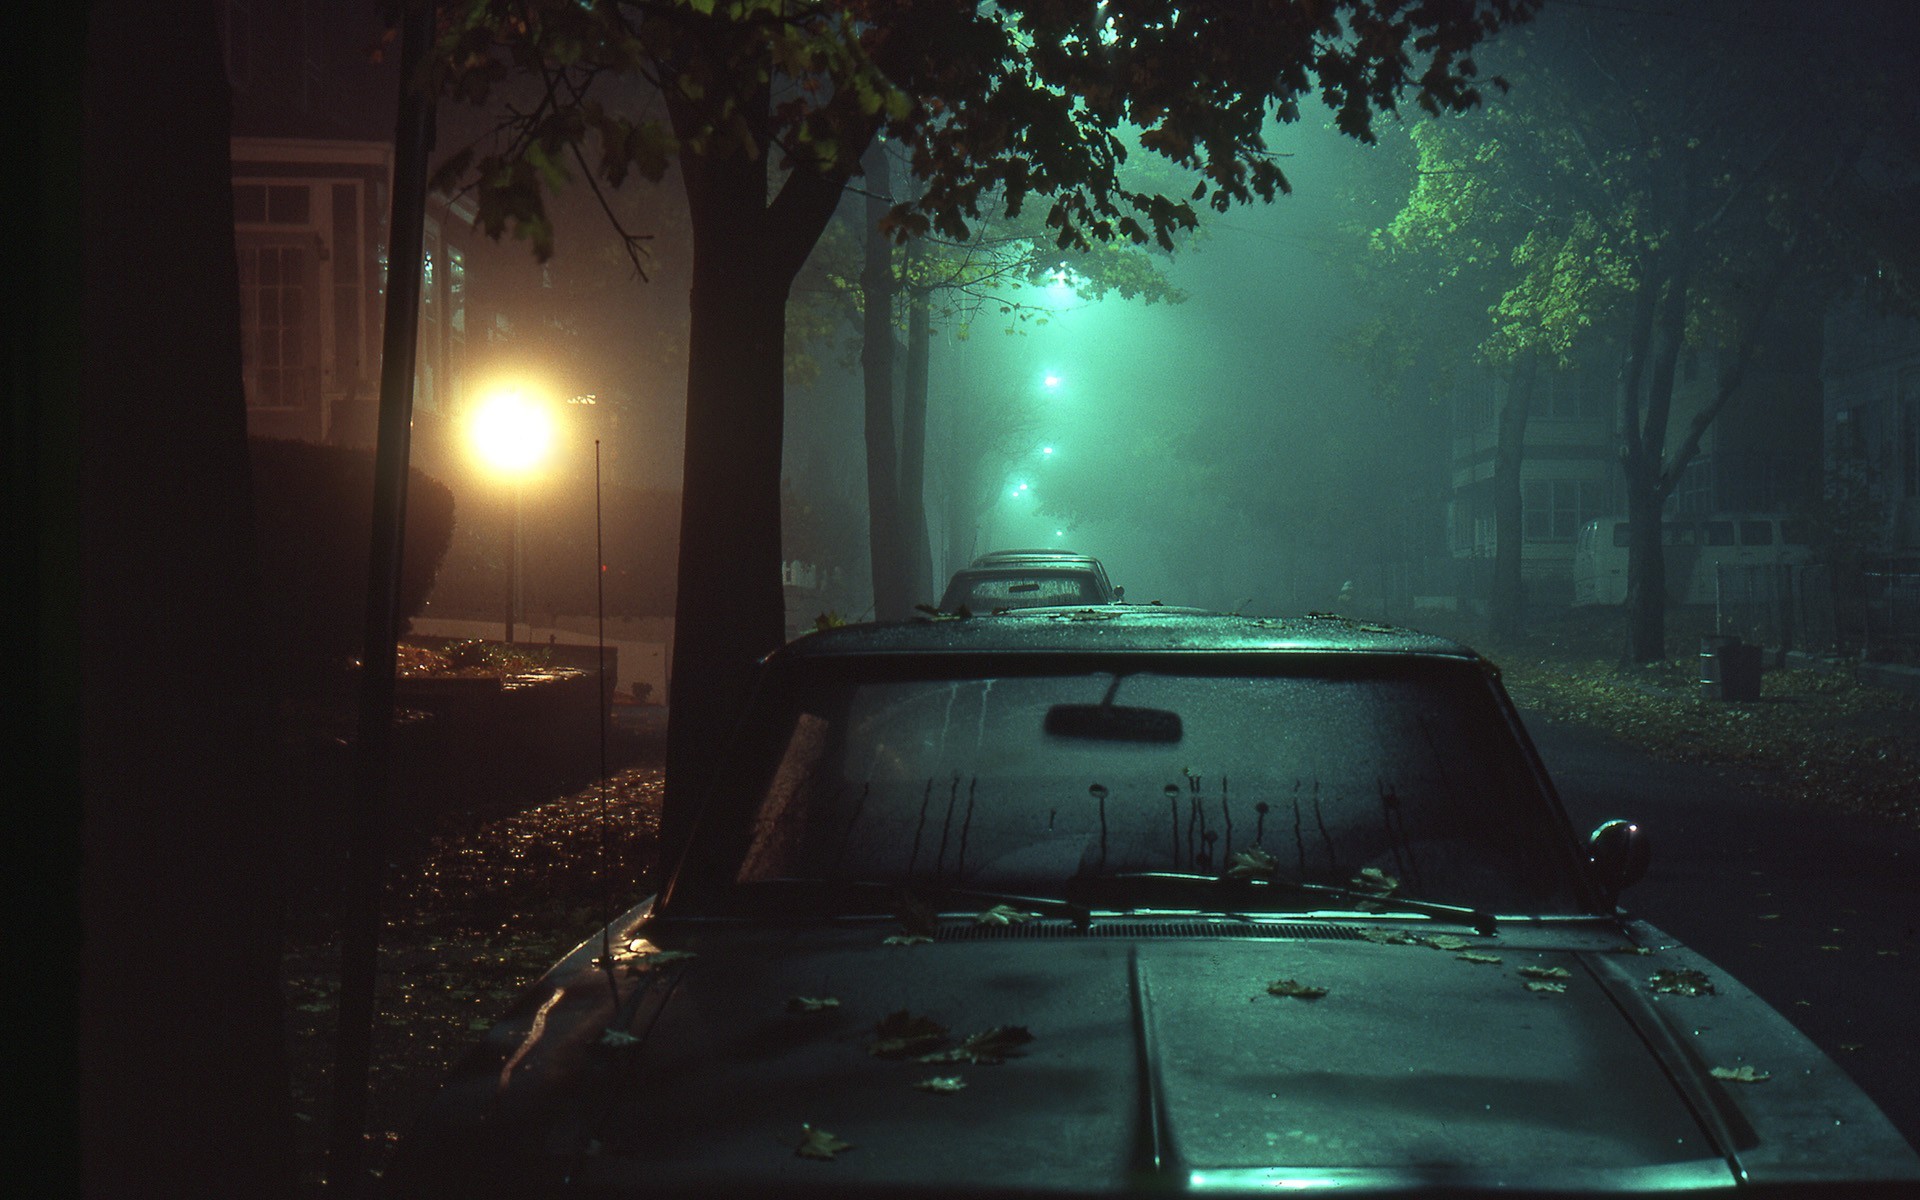 General 1920x1200 street car night street light lights mist dew green turquoise vehicle trees